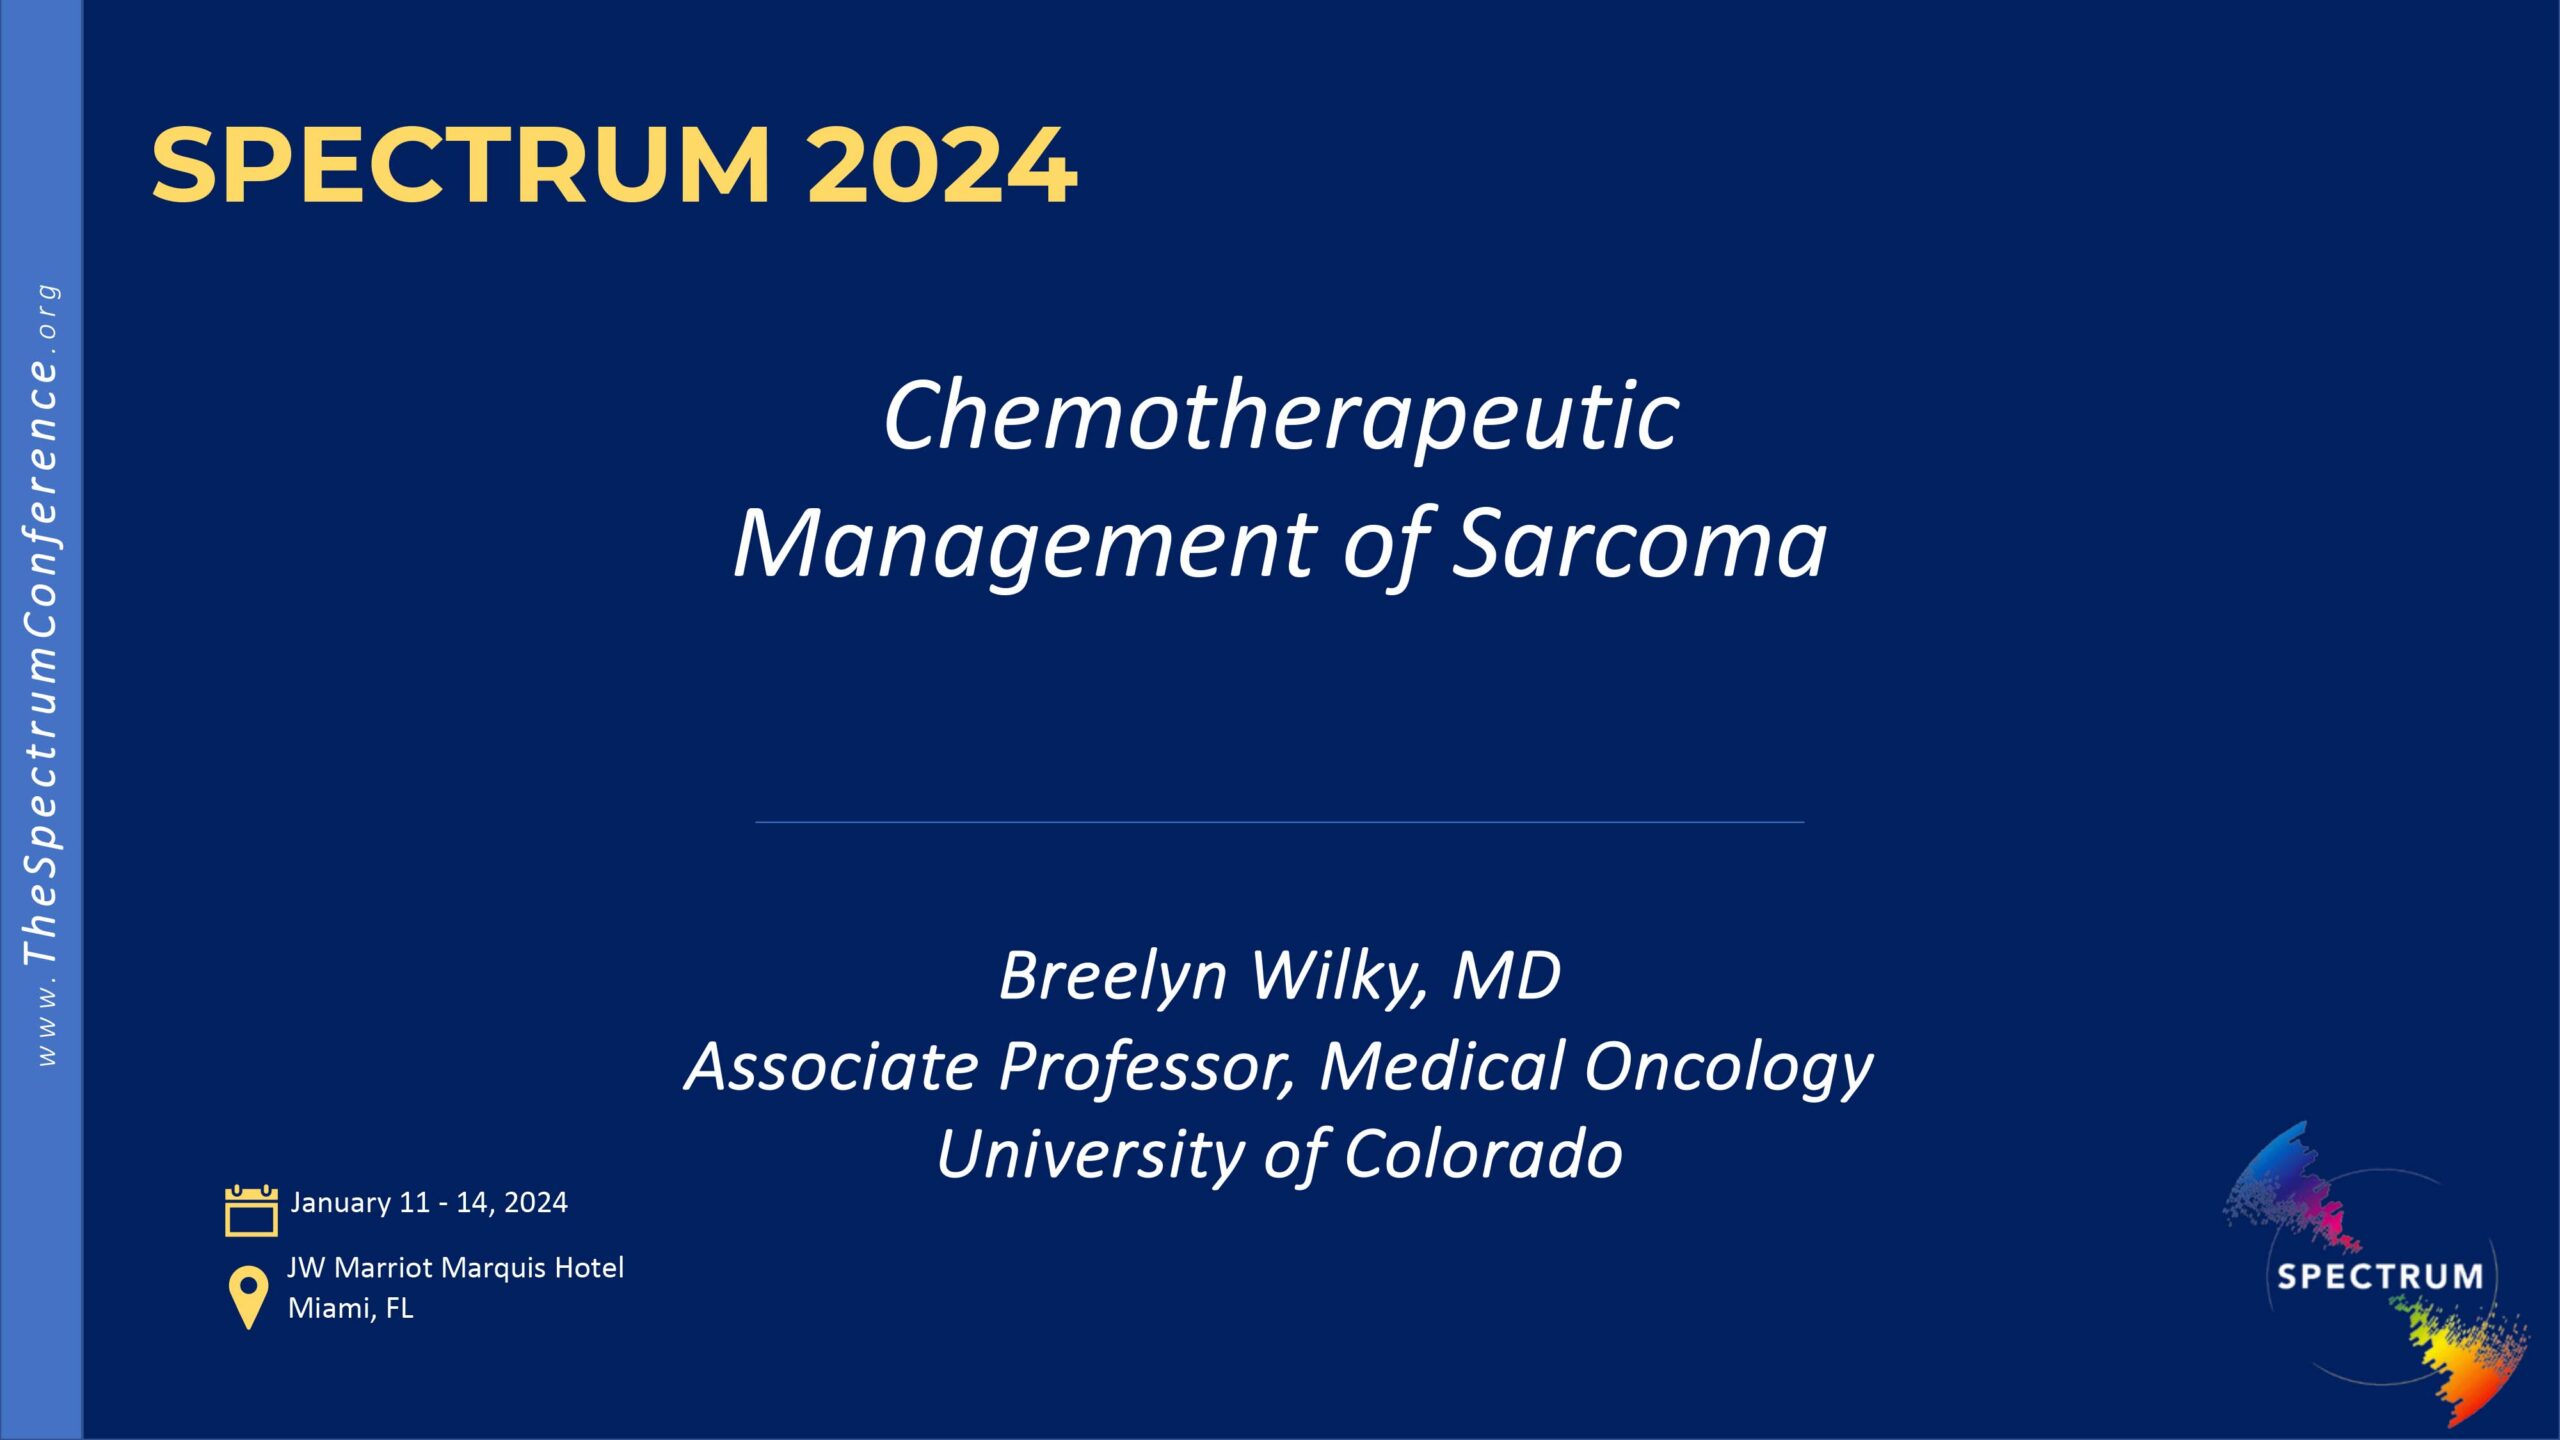 Chemotherapeutic management of sarcoma